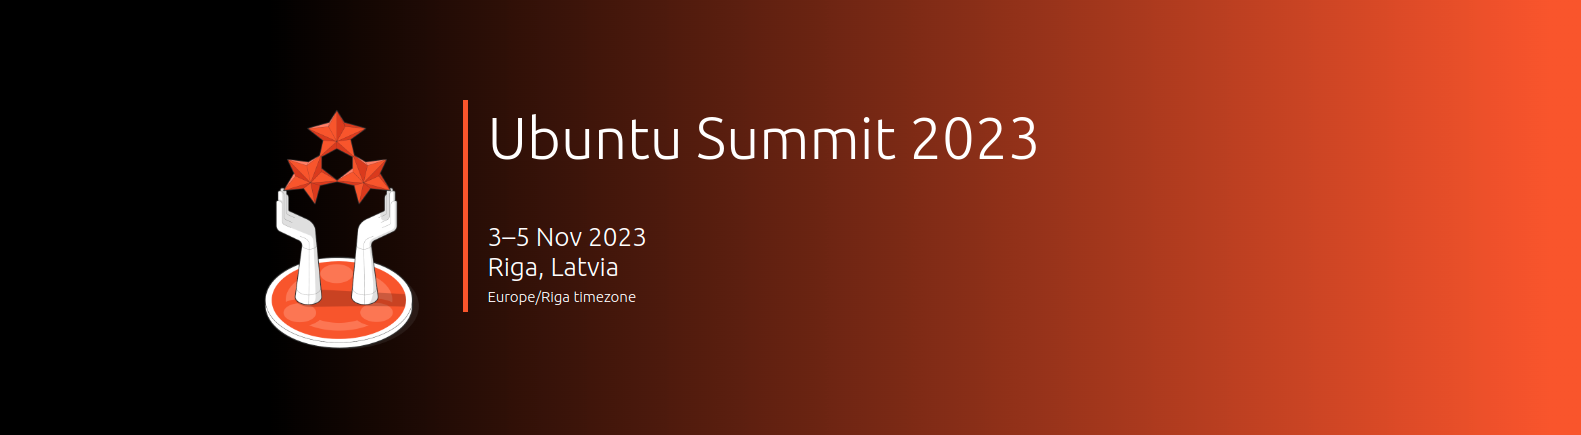 Ubuntu Summit